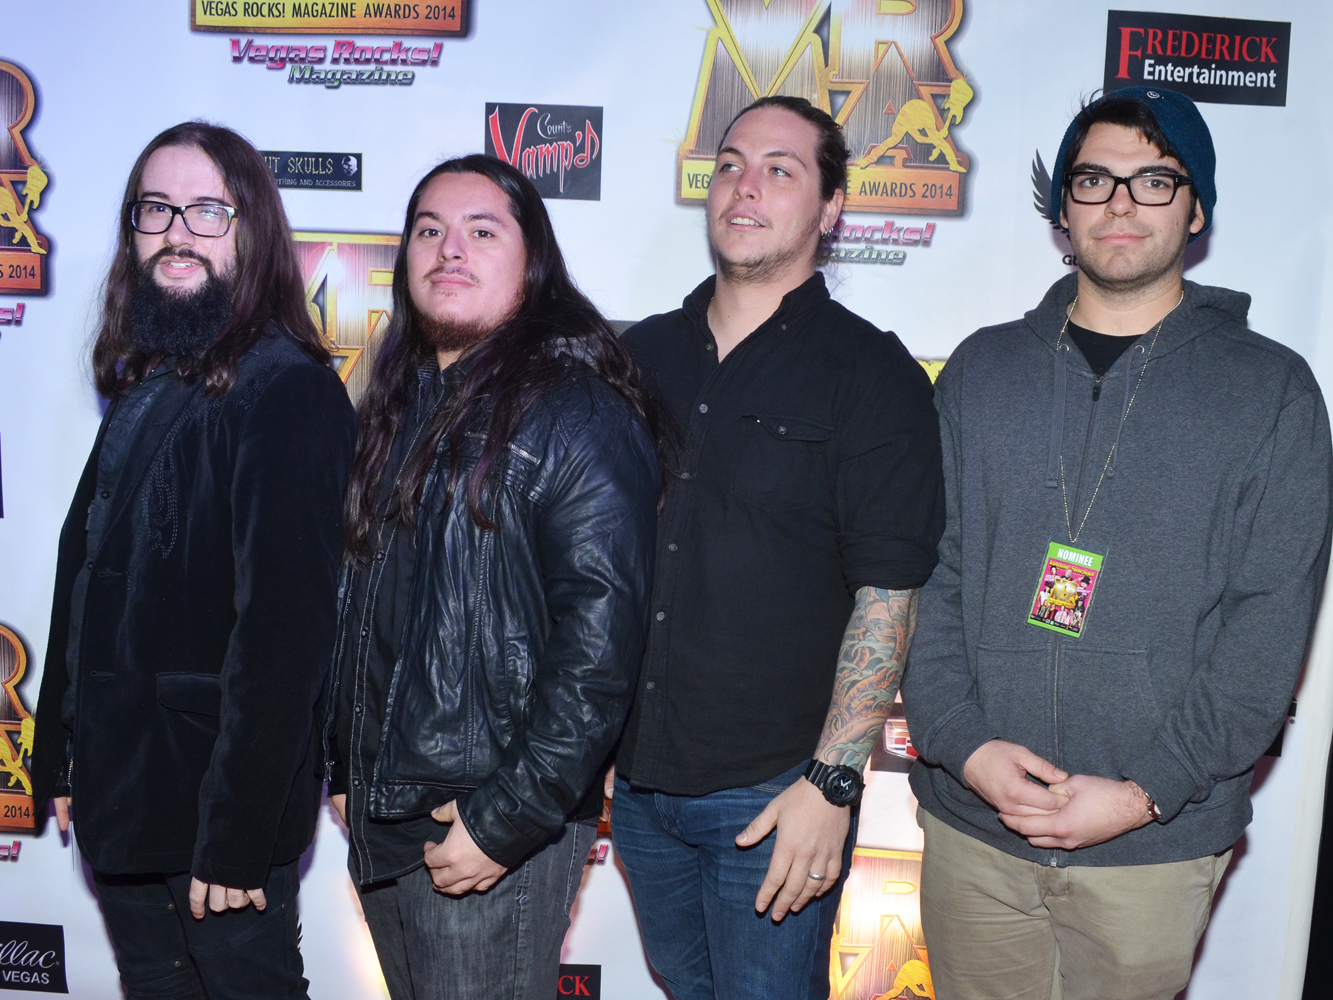 Sicocis - Vegas Rocks Magazine Music Awards 2014 photo credit Stephen Thorburn 63671